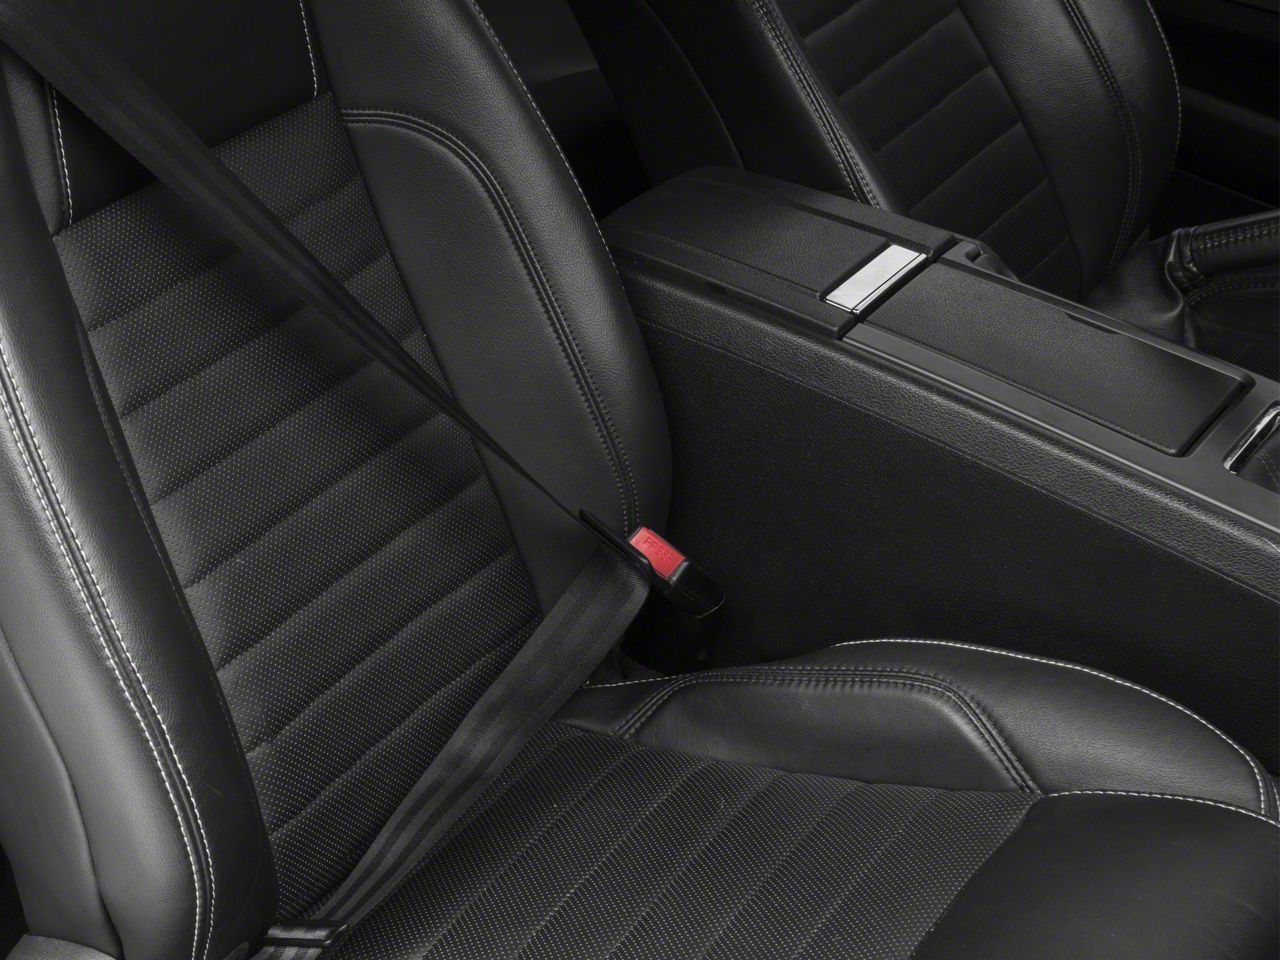 1 Set Universal 3 Point Safety Seat Belt Car Auto Vehicle Adjustable Retractable